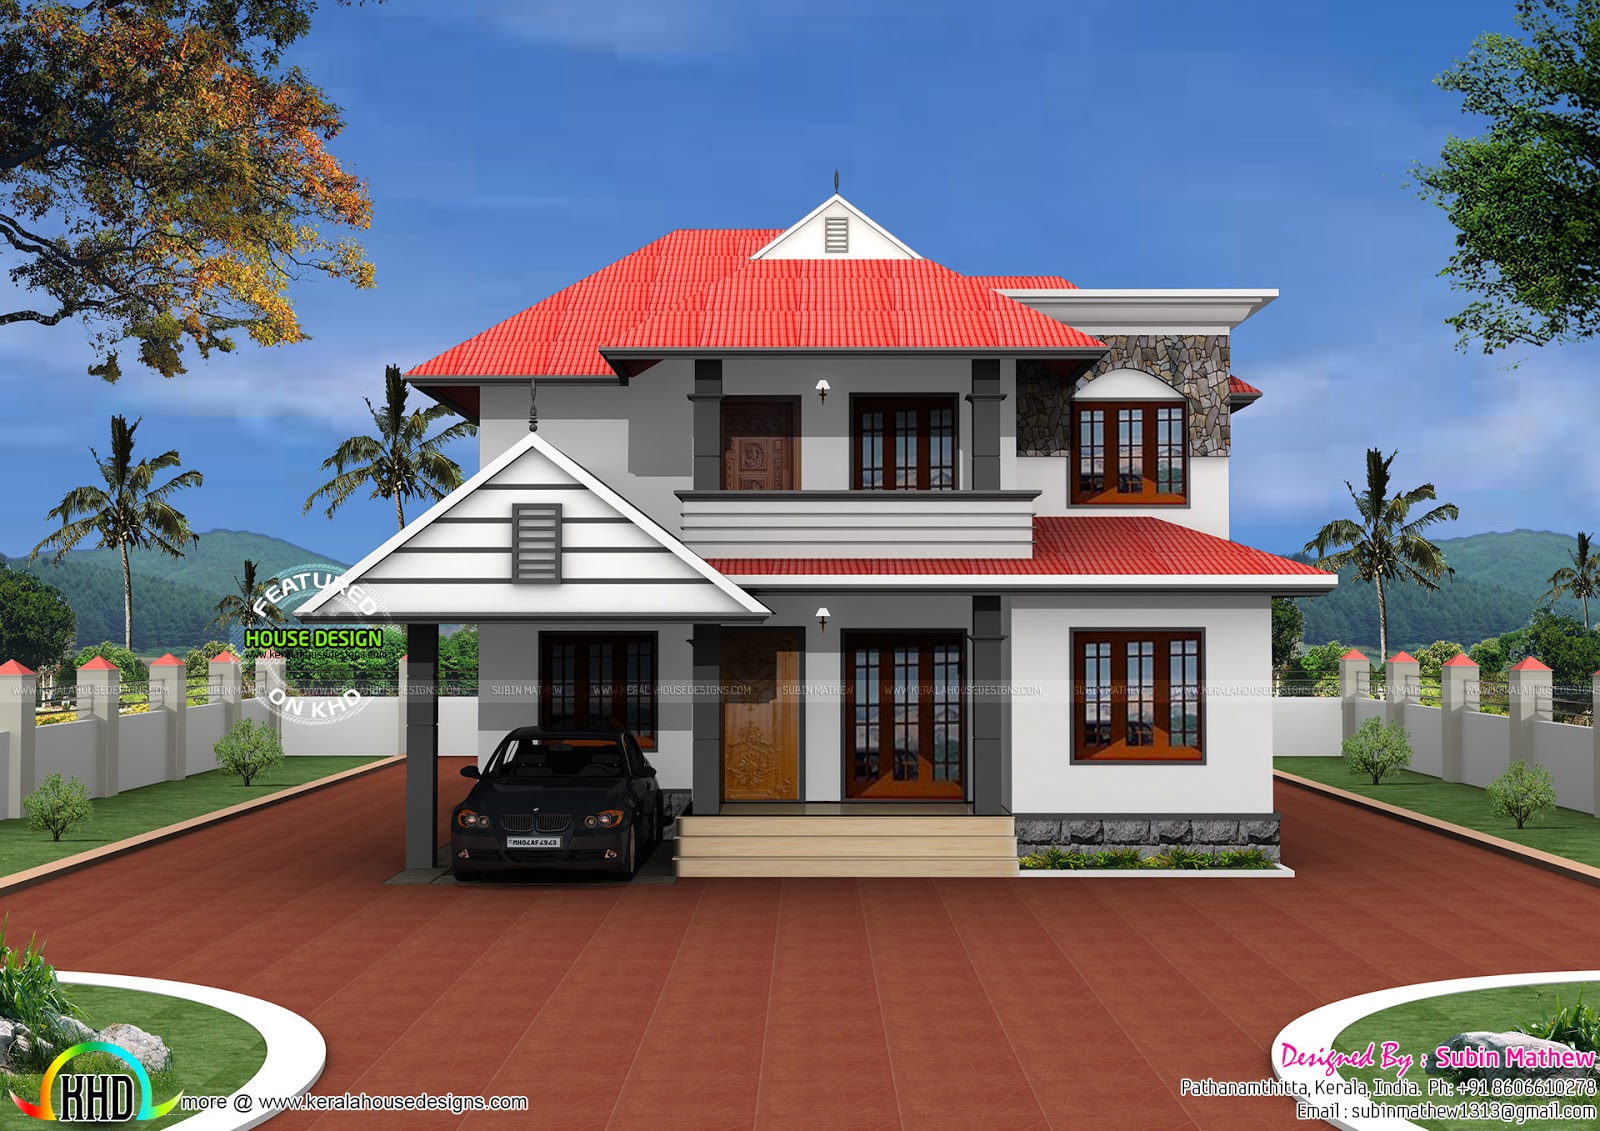 Typical Kerala  home  in 2500 sq  ft  Kerala  home  design  